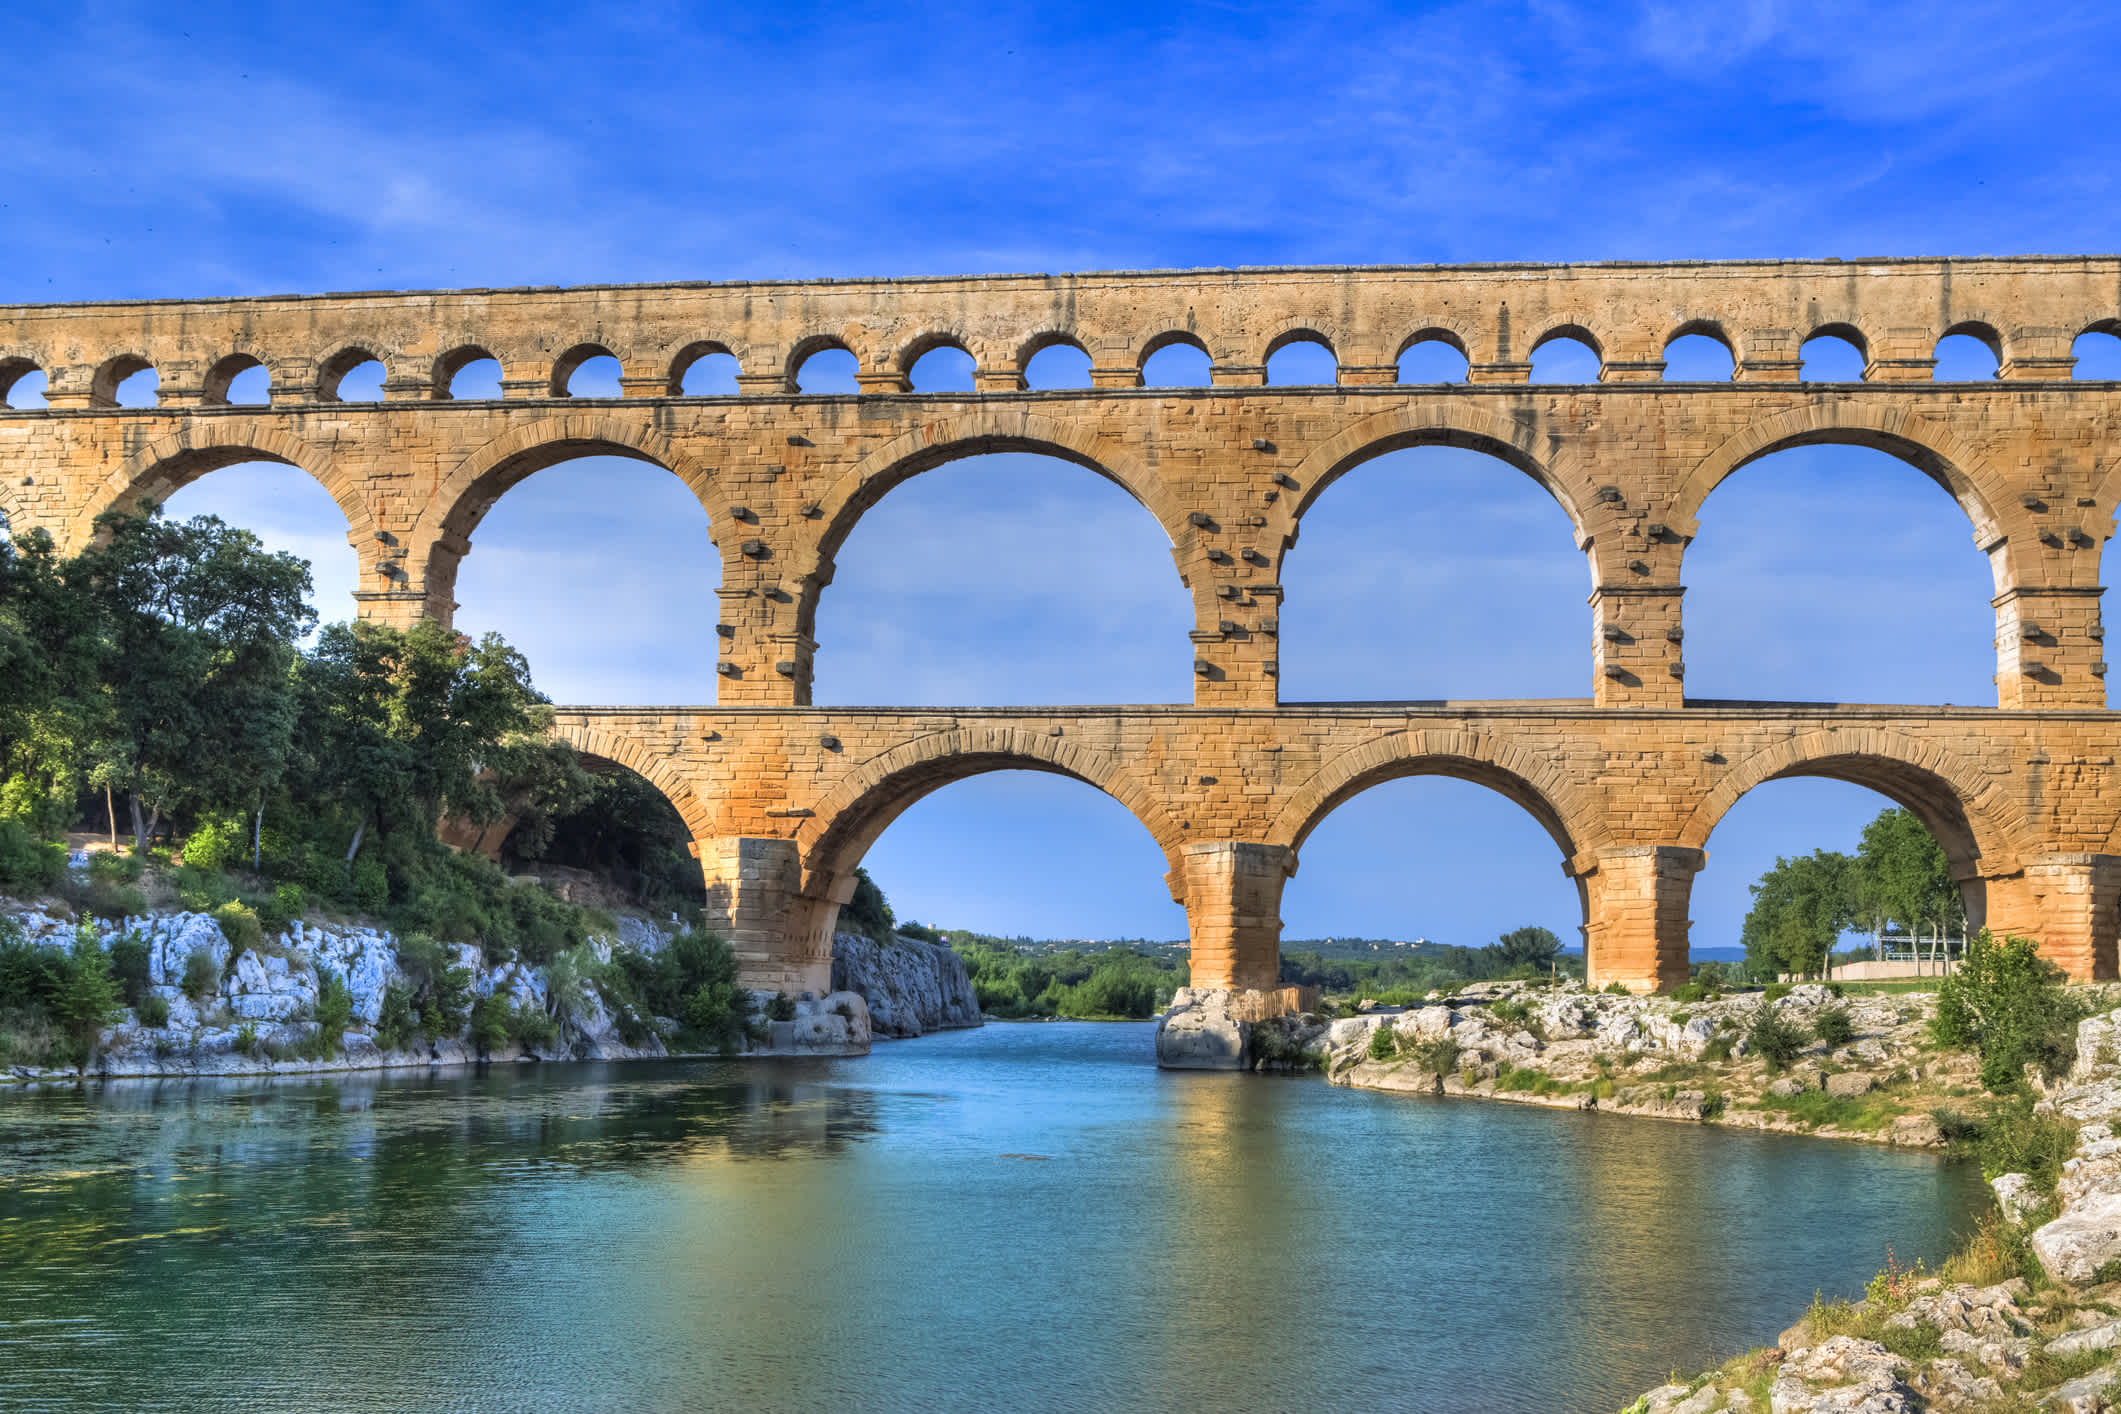 5. Pont du Gard